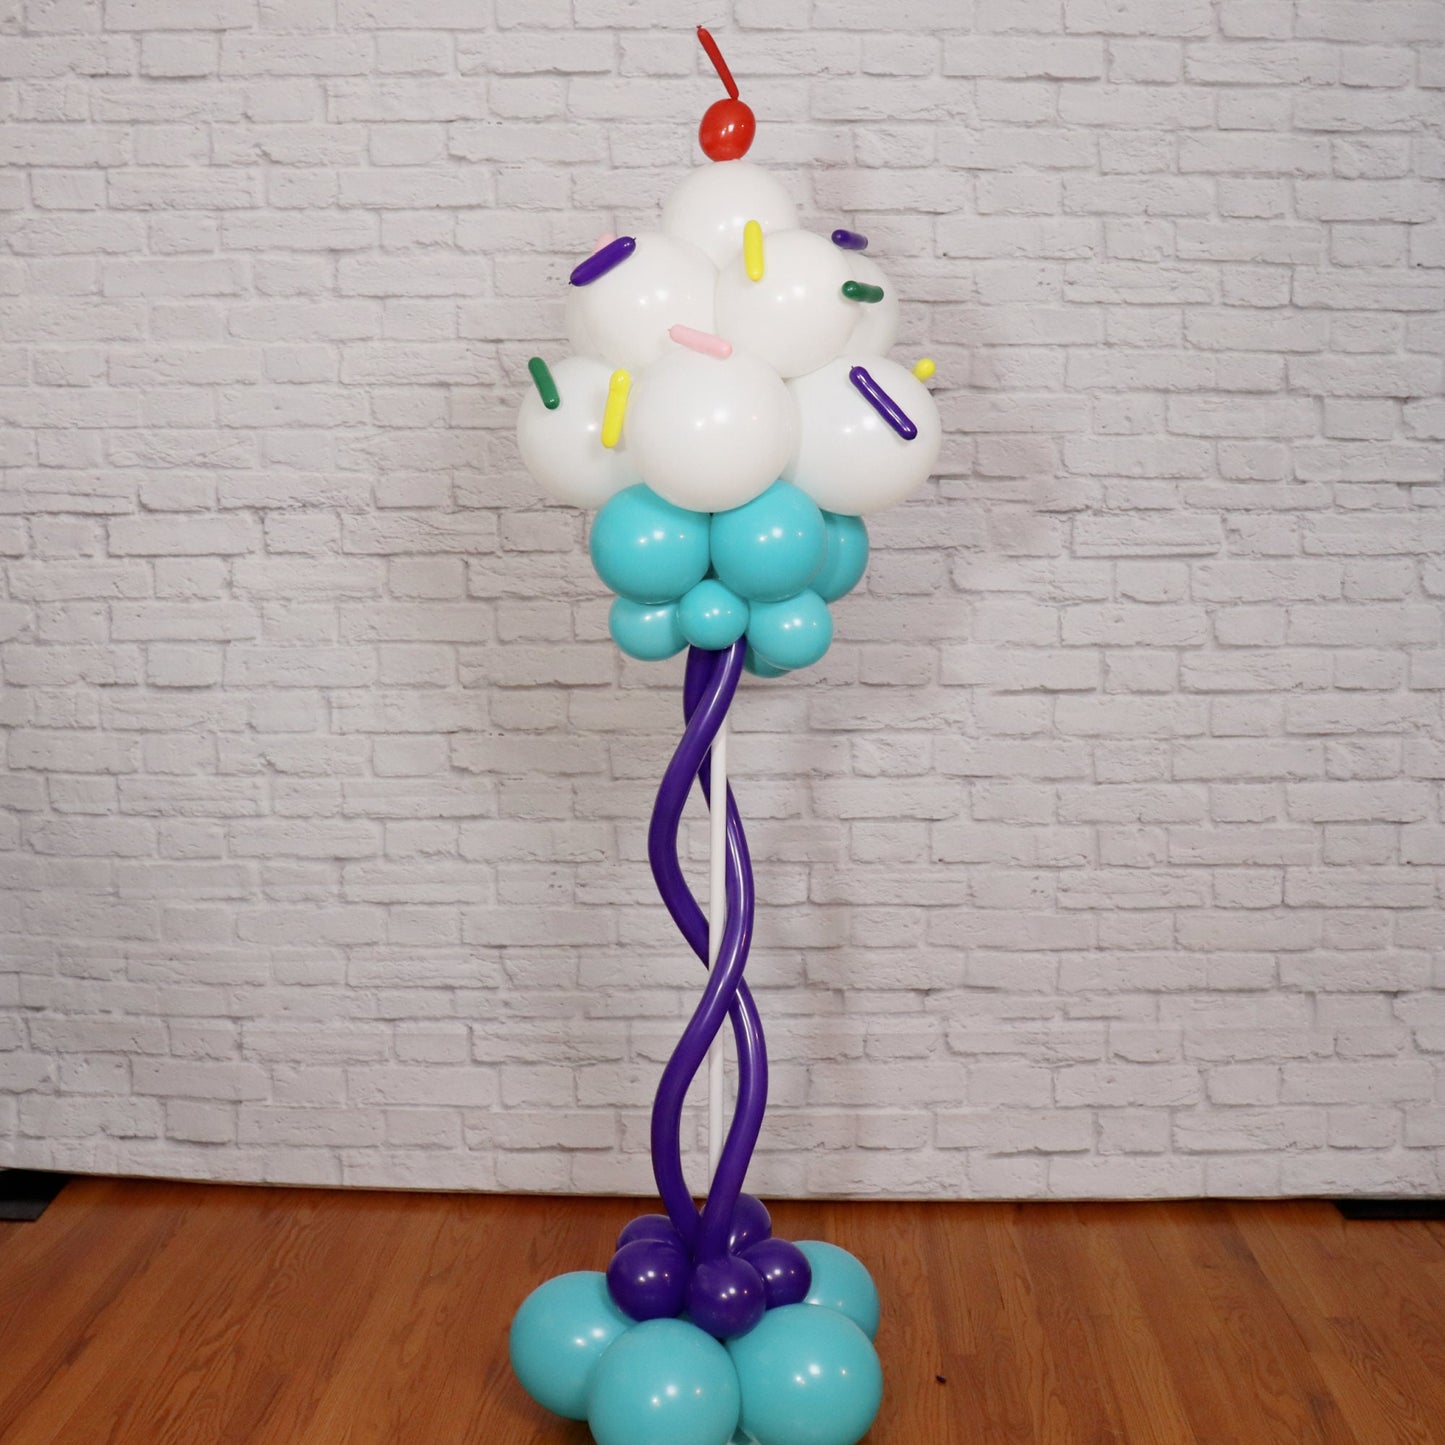 Cupcake Balloon Column Tutorial and Plans | Digital Balloon Recipe